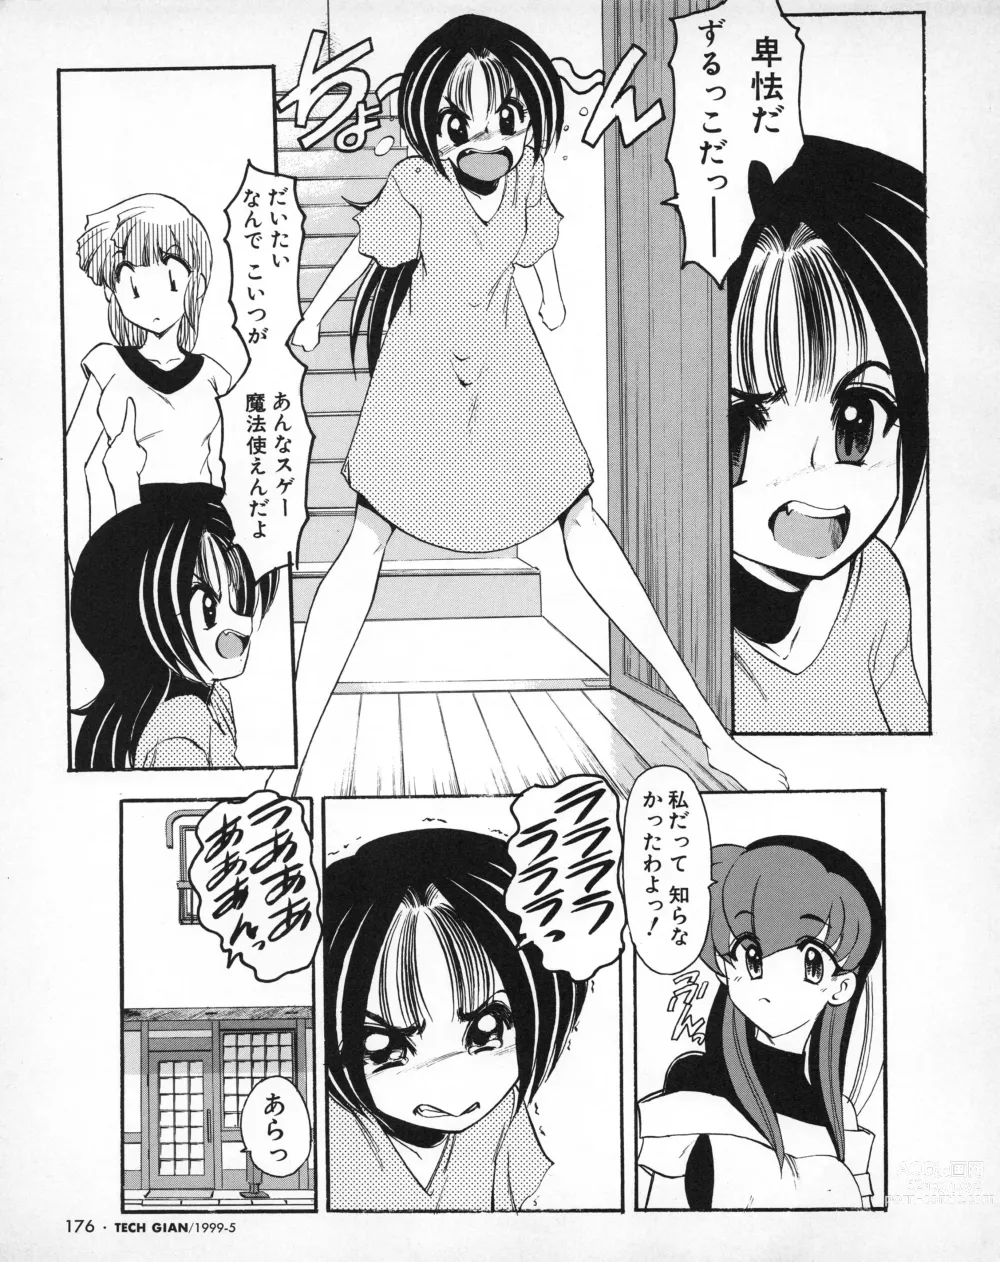 Page 167 of manga Tech Gian 031